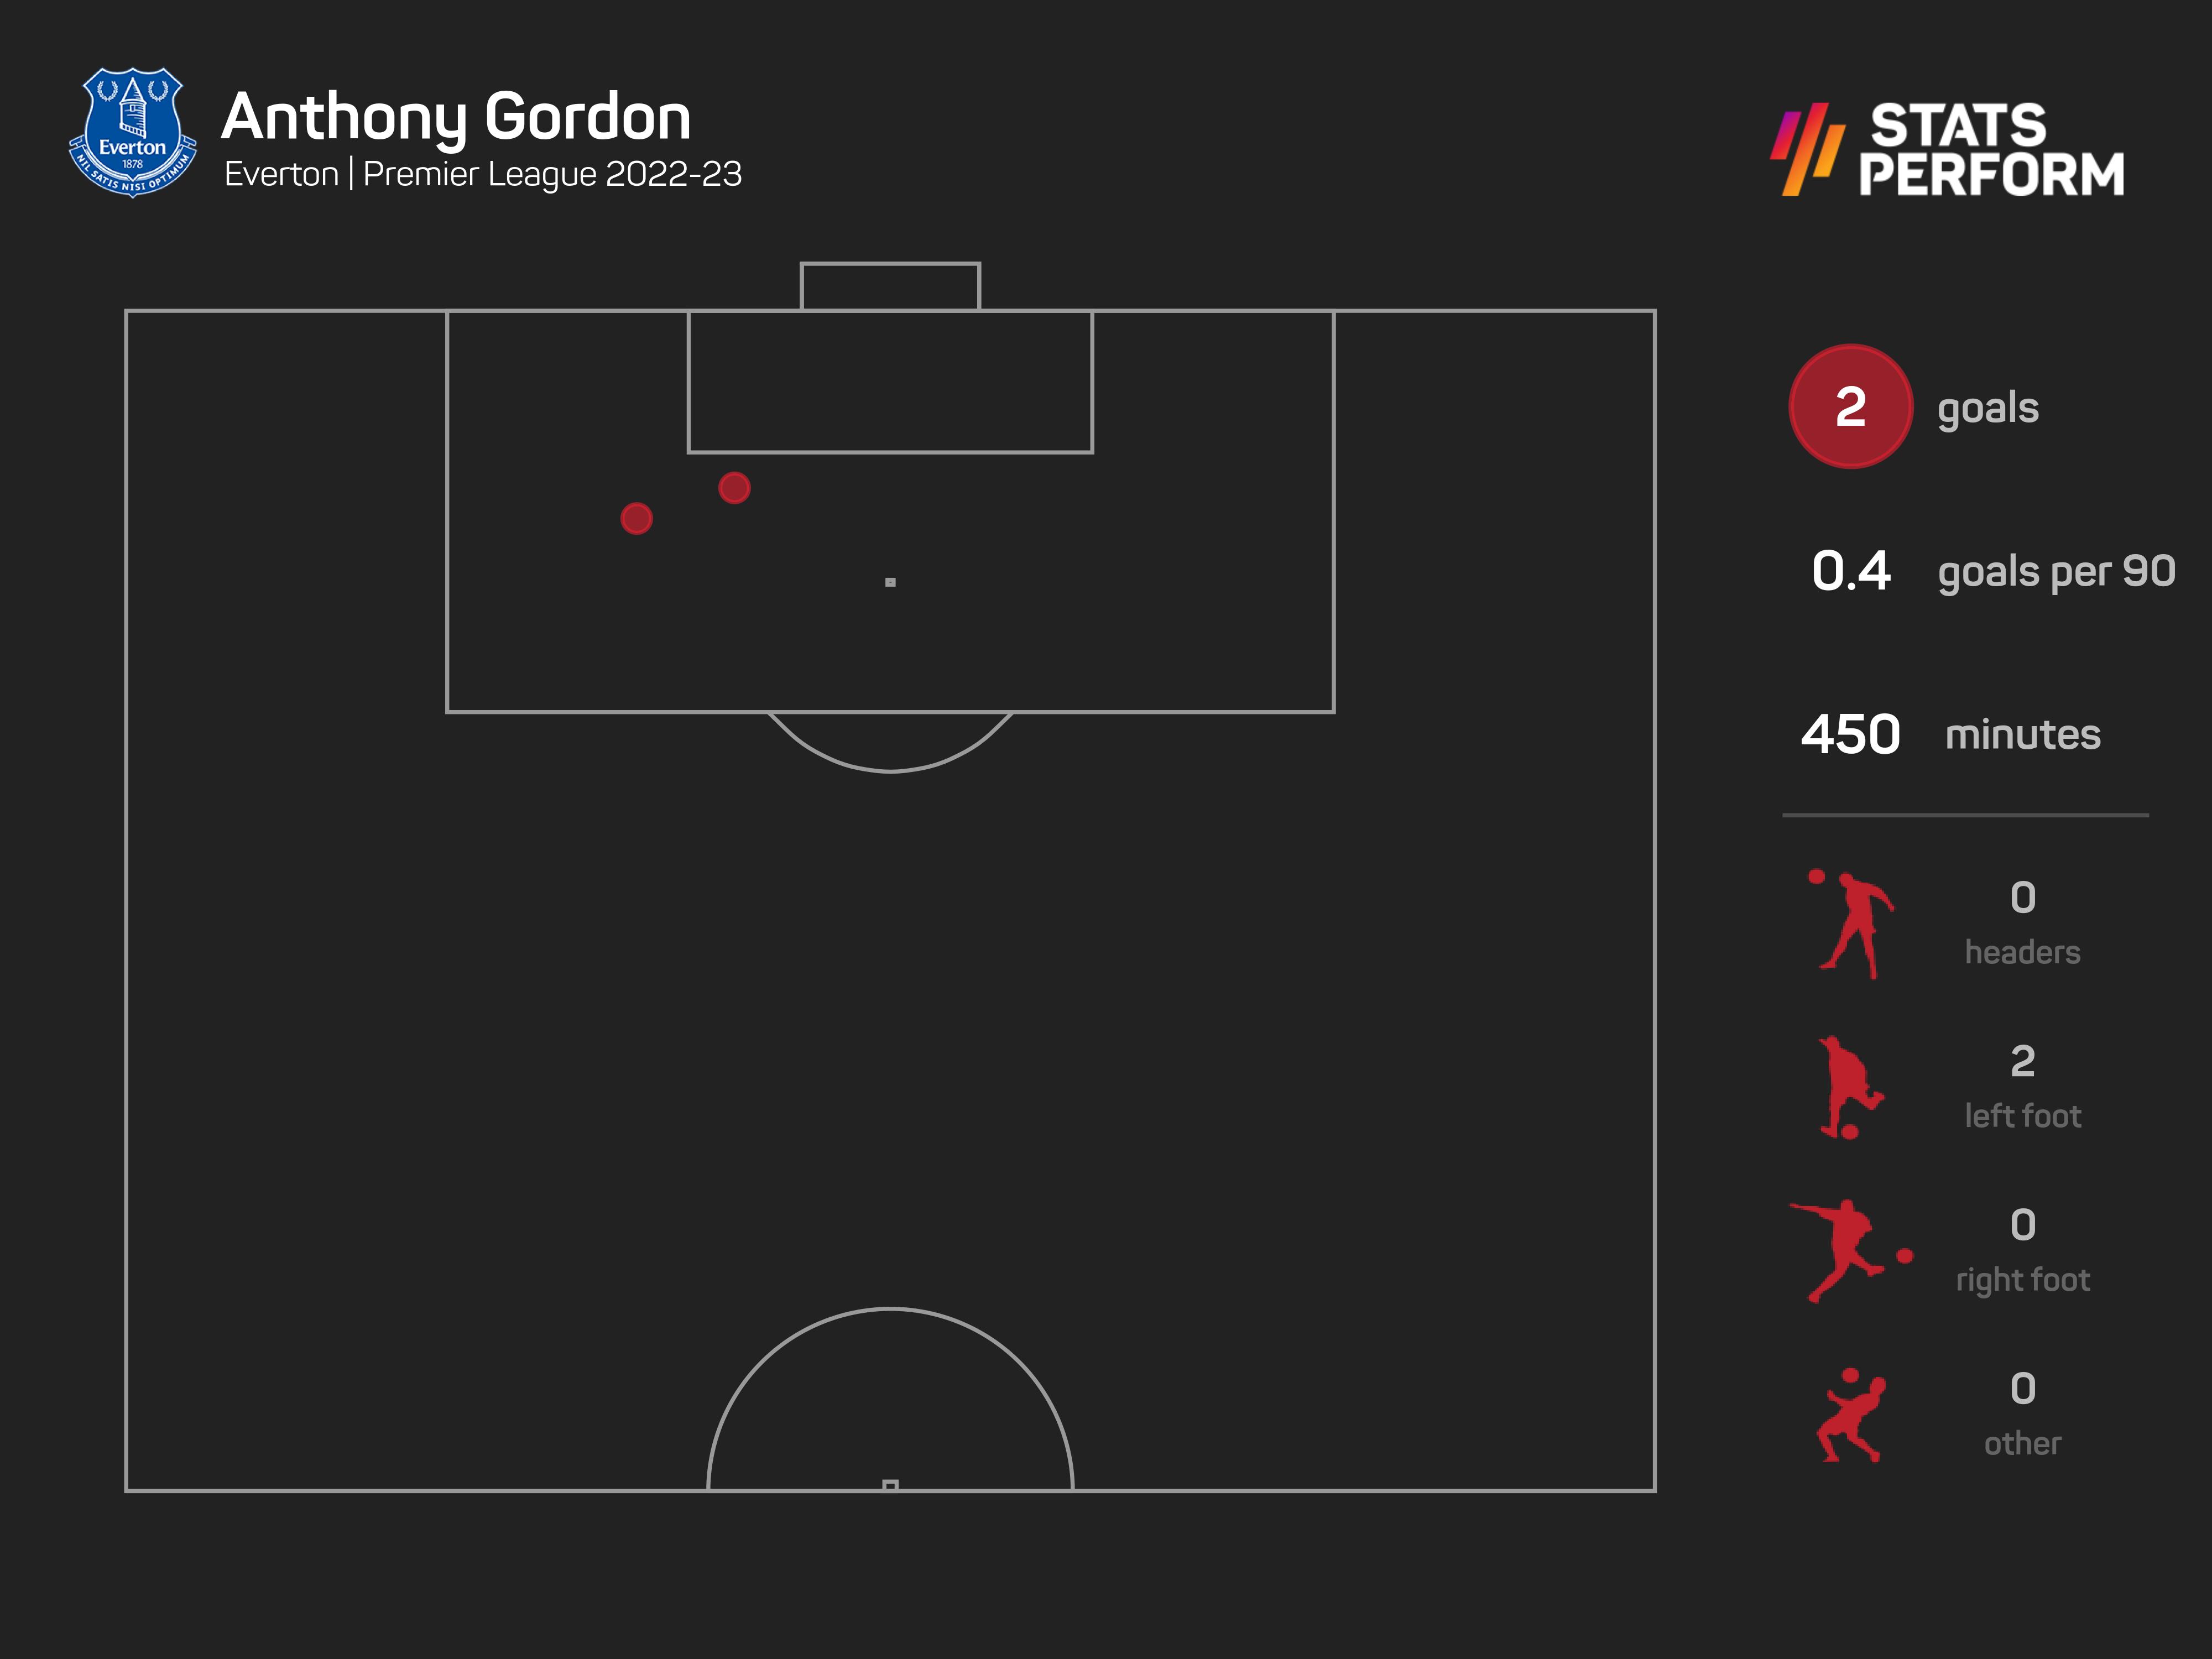 Antony Gordon has two goals this season